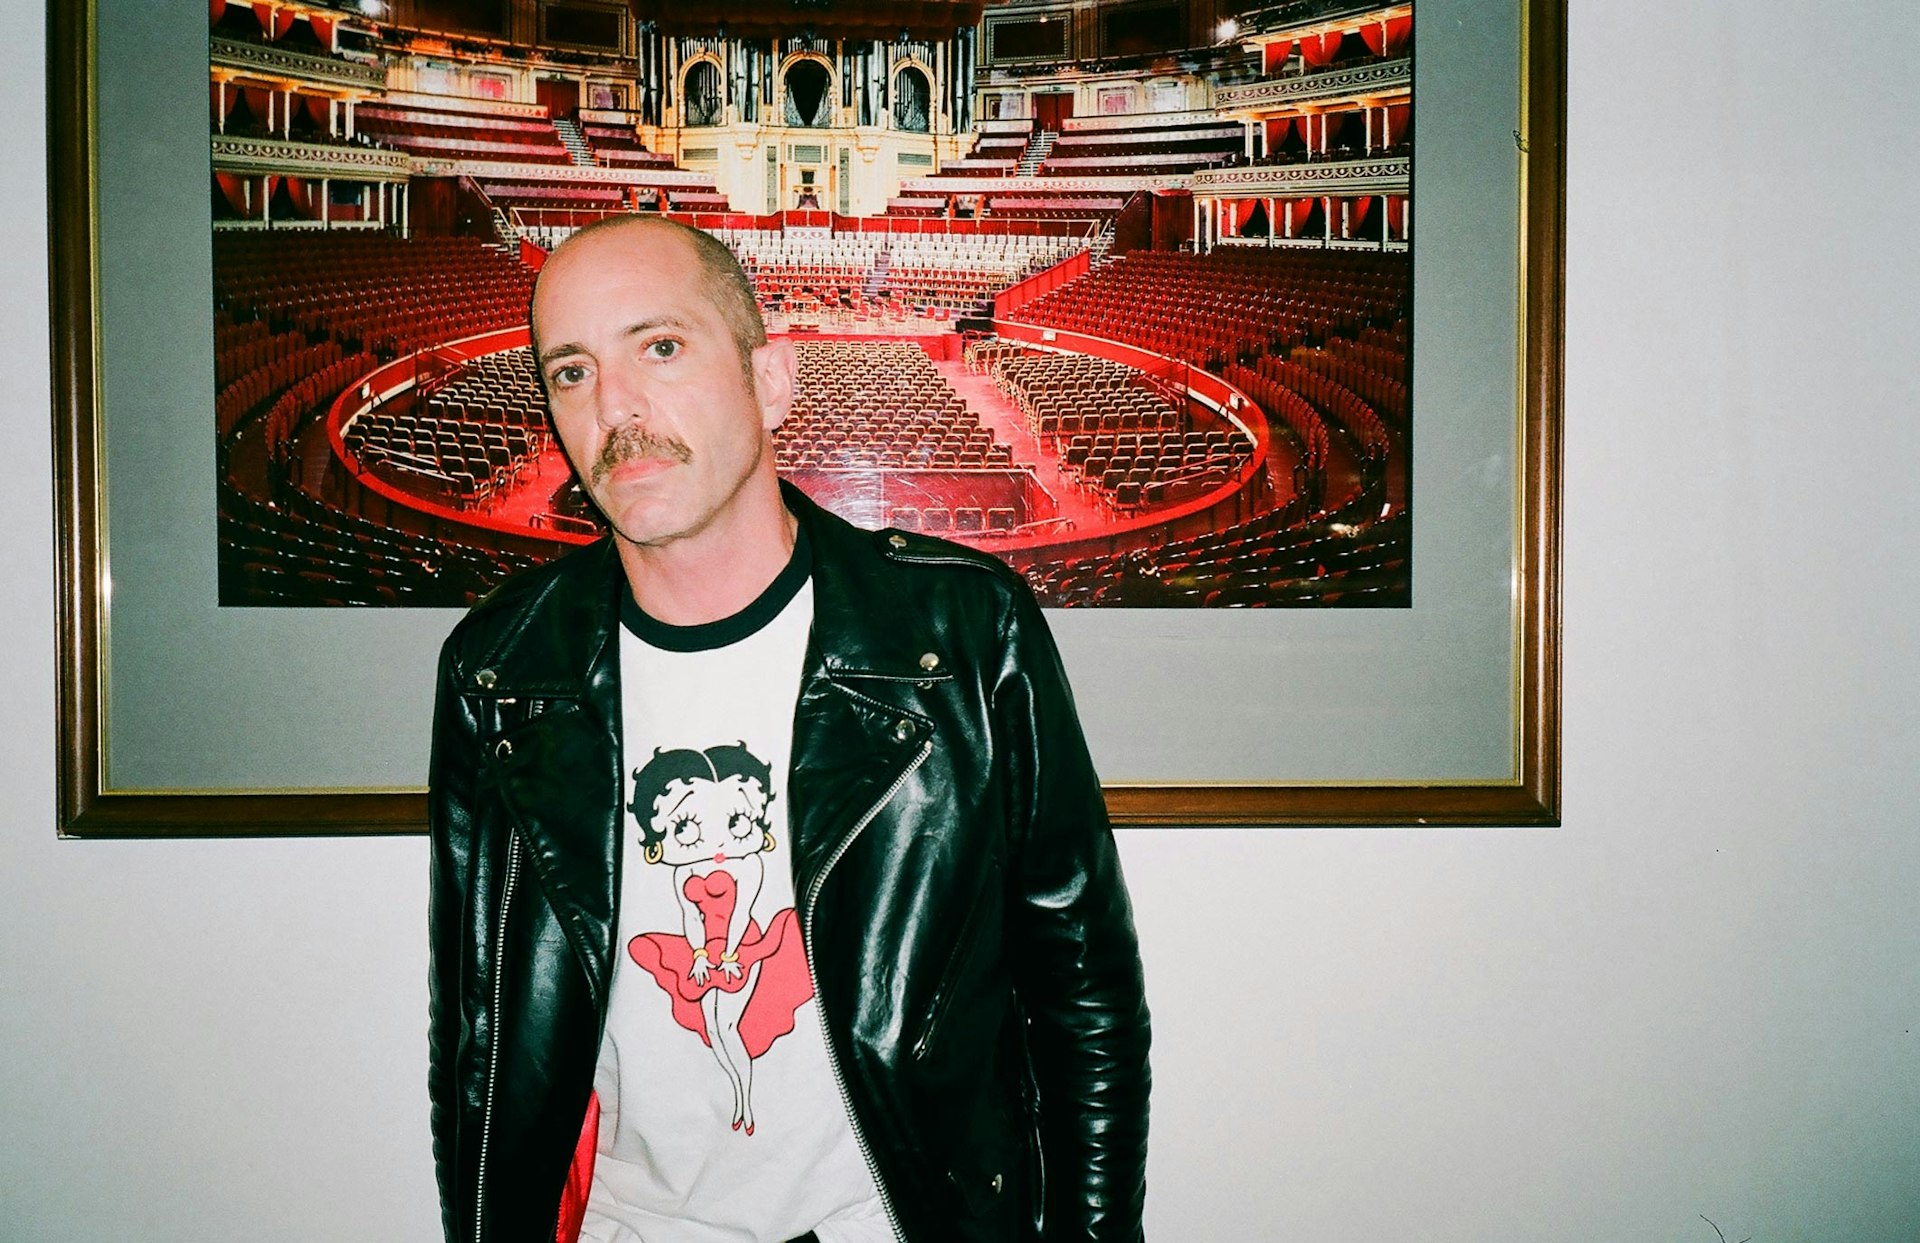 Matt Sweeney at the Royal Albert Hall in London. Photo by Steven T. Hanley.